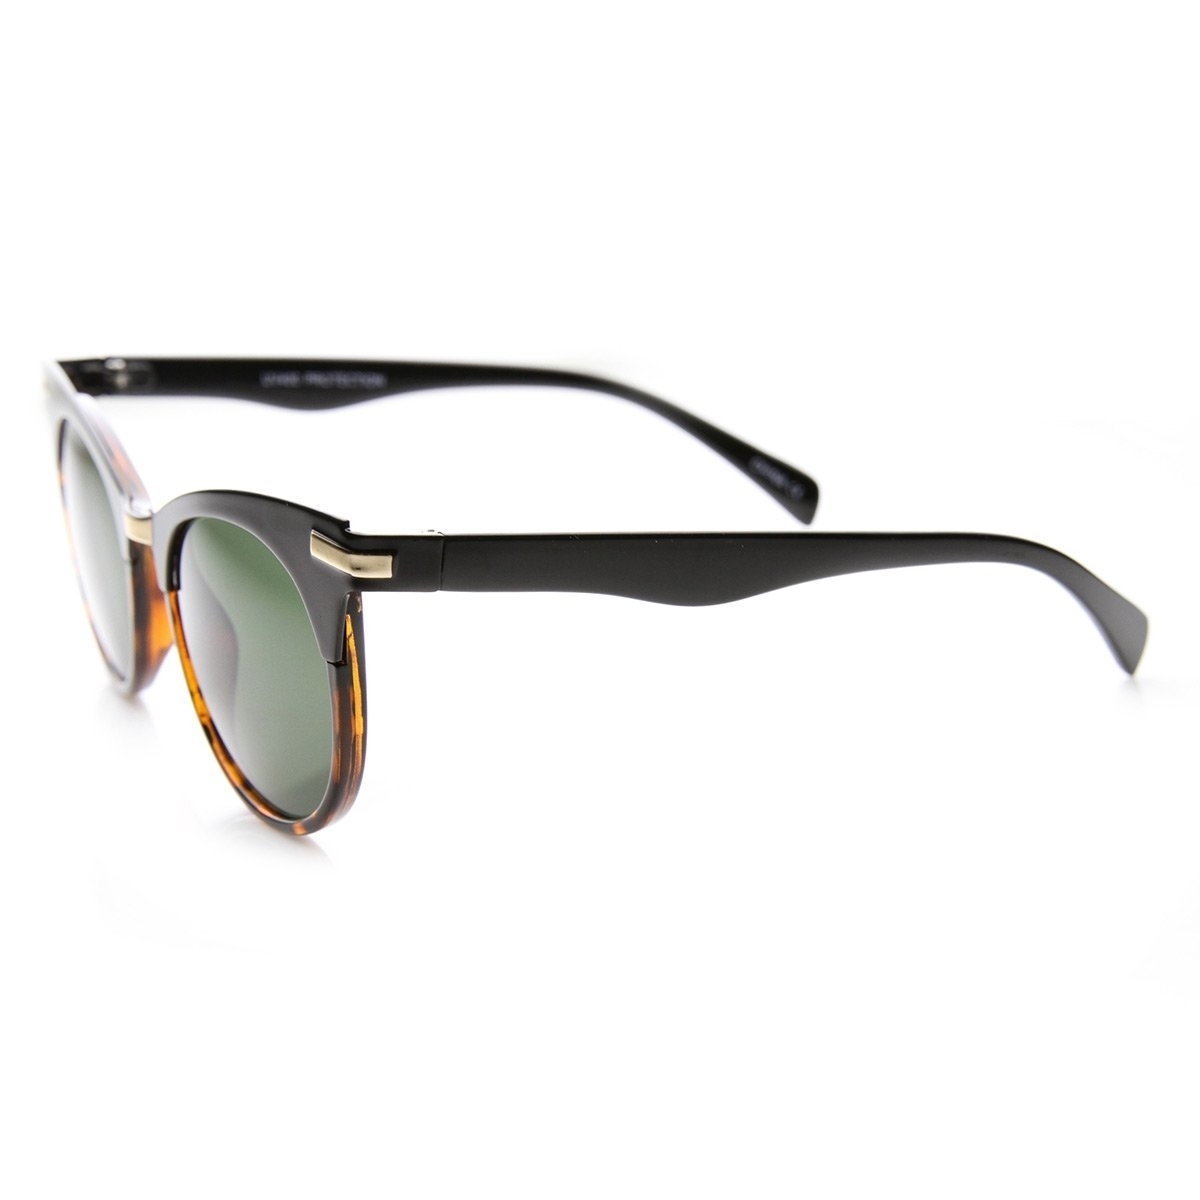 Retro Mod Fashion High Temple Riveted Round Cat Eye Sunglasses - Black-Clear Green